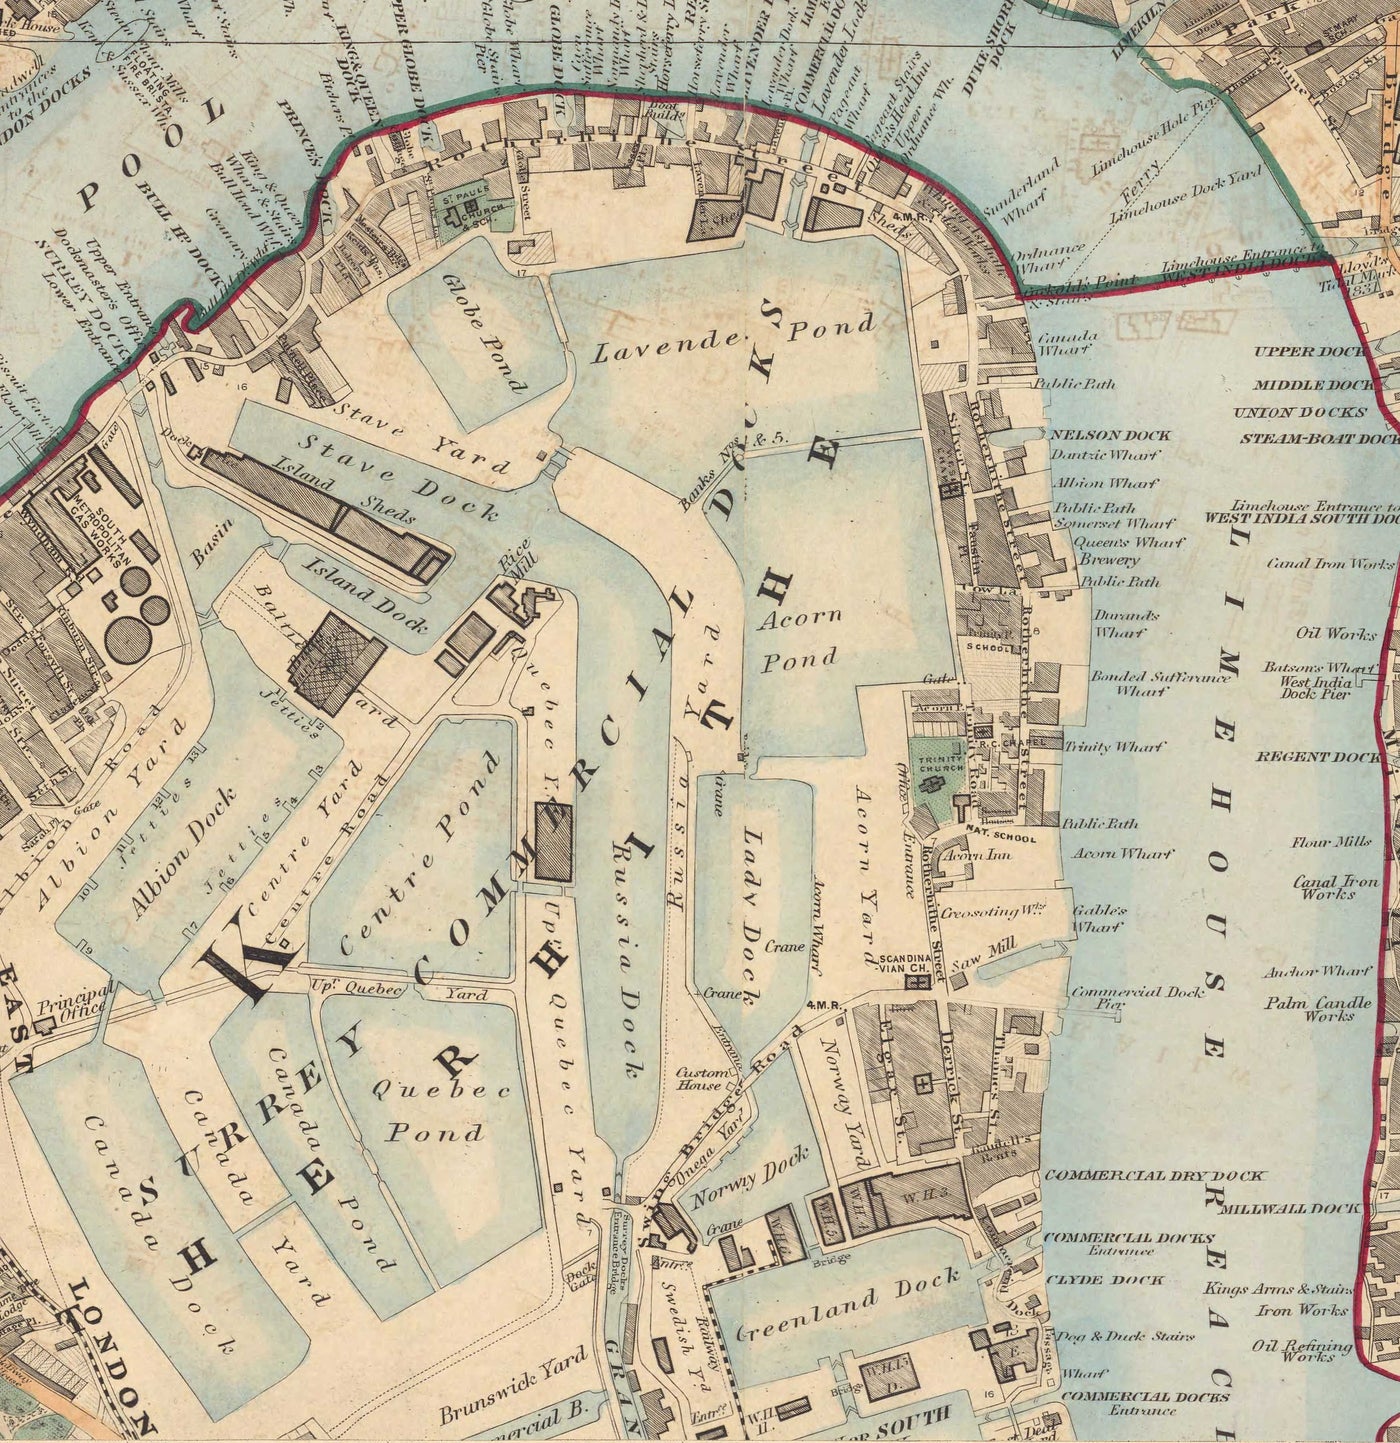 Old Colour Map of East London 1891 - Isle of Dogs, Tower Hamlets, Limehouse, Poplar, Canary Wharf, Surrey Quays - E1 E3 E14 SE16